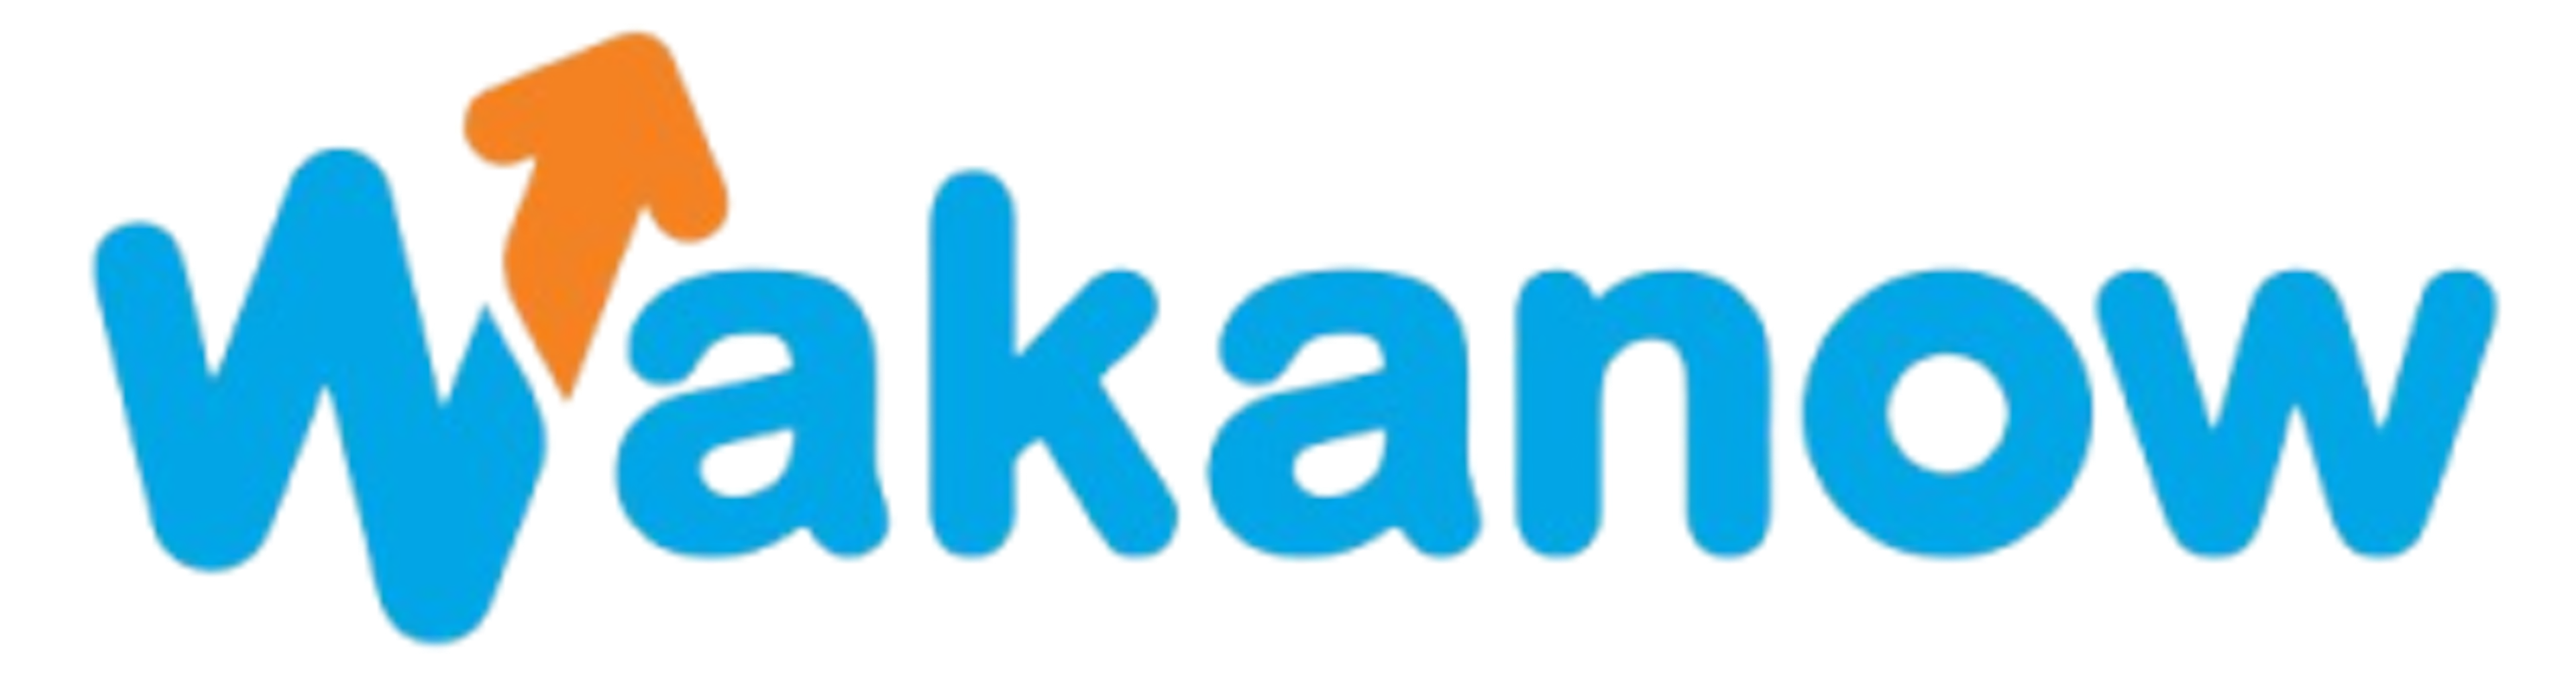 Wakanow-Logo.png